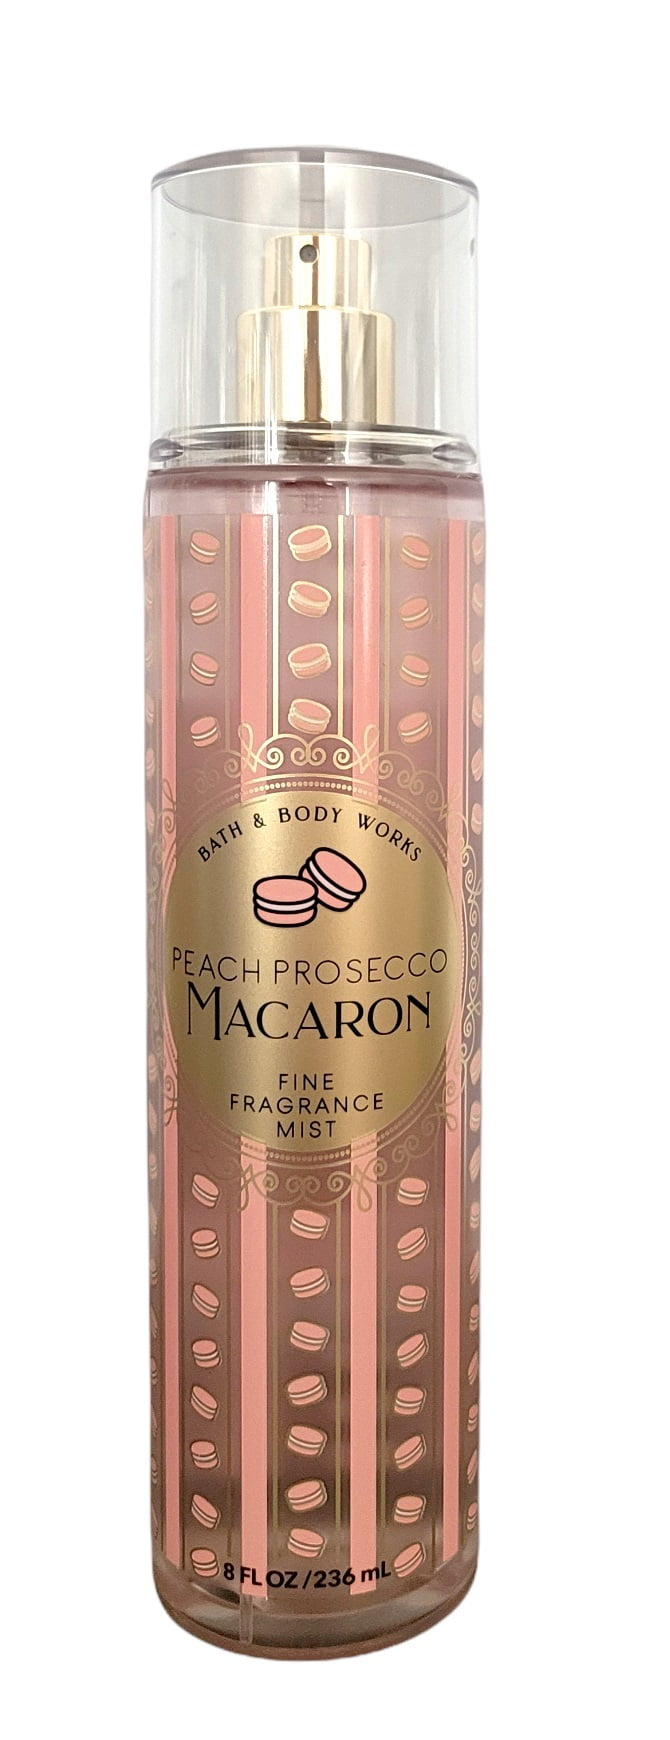 Bath and Body Works Peach Prosecco Macaron Fine Fragrance Body